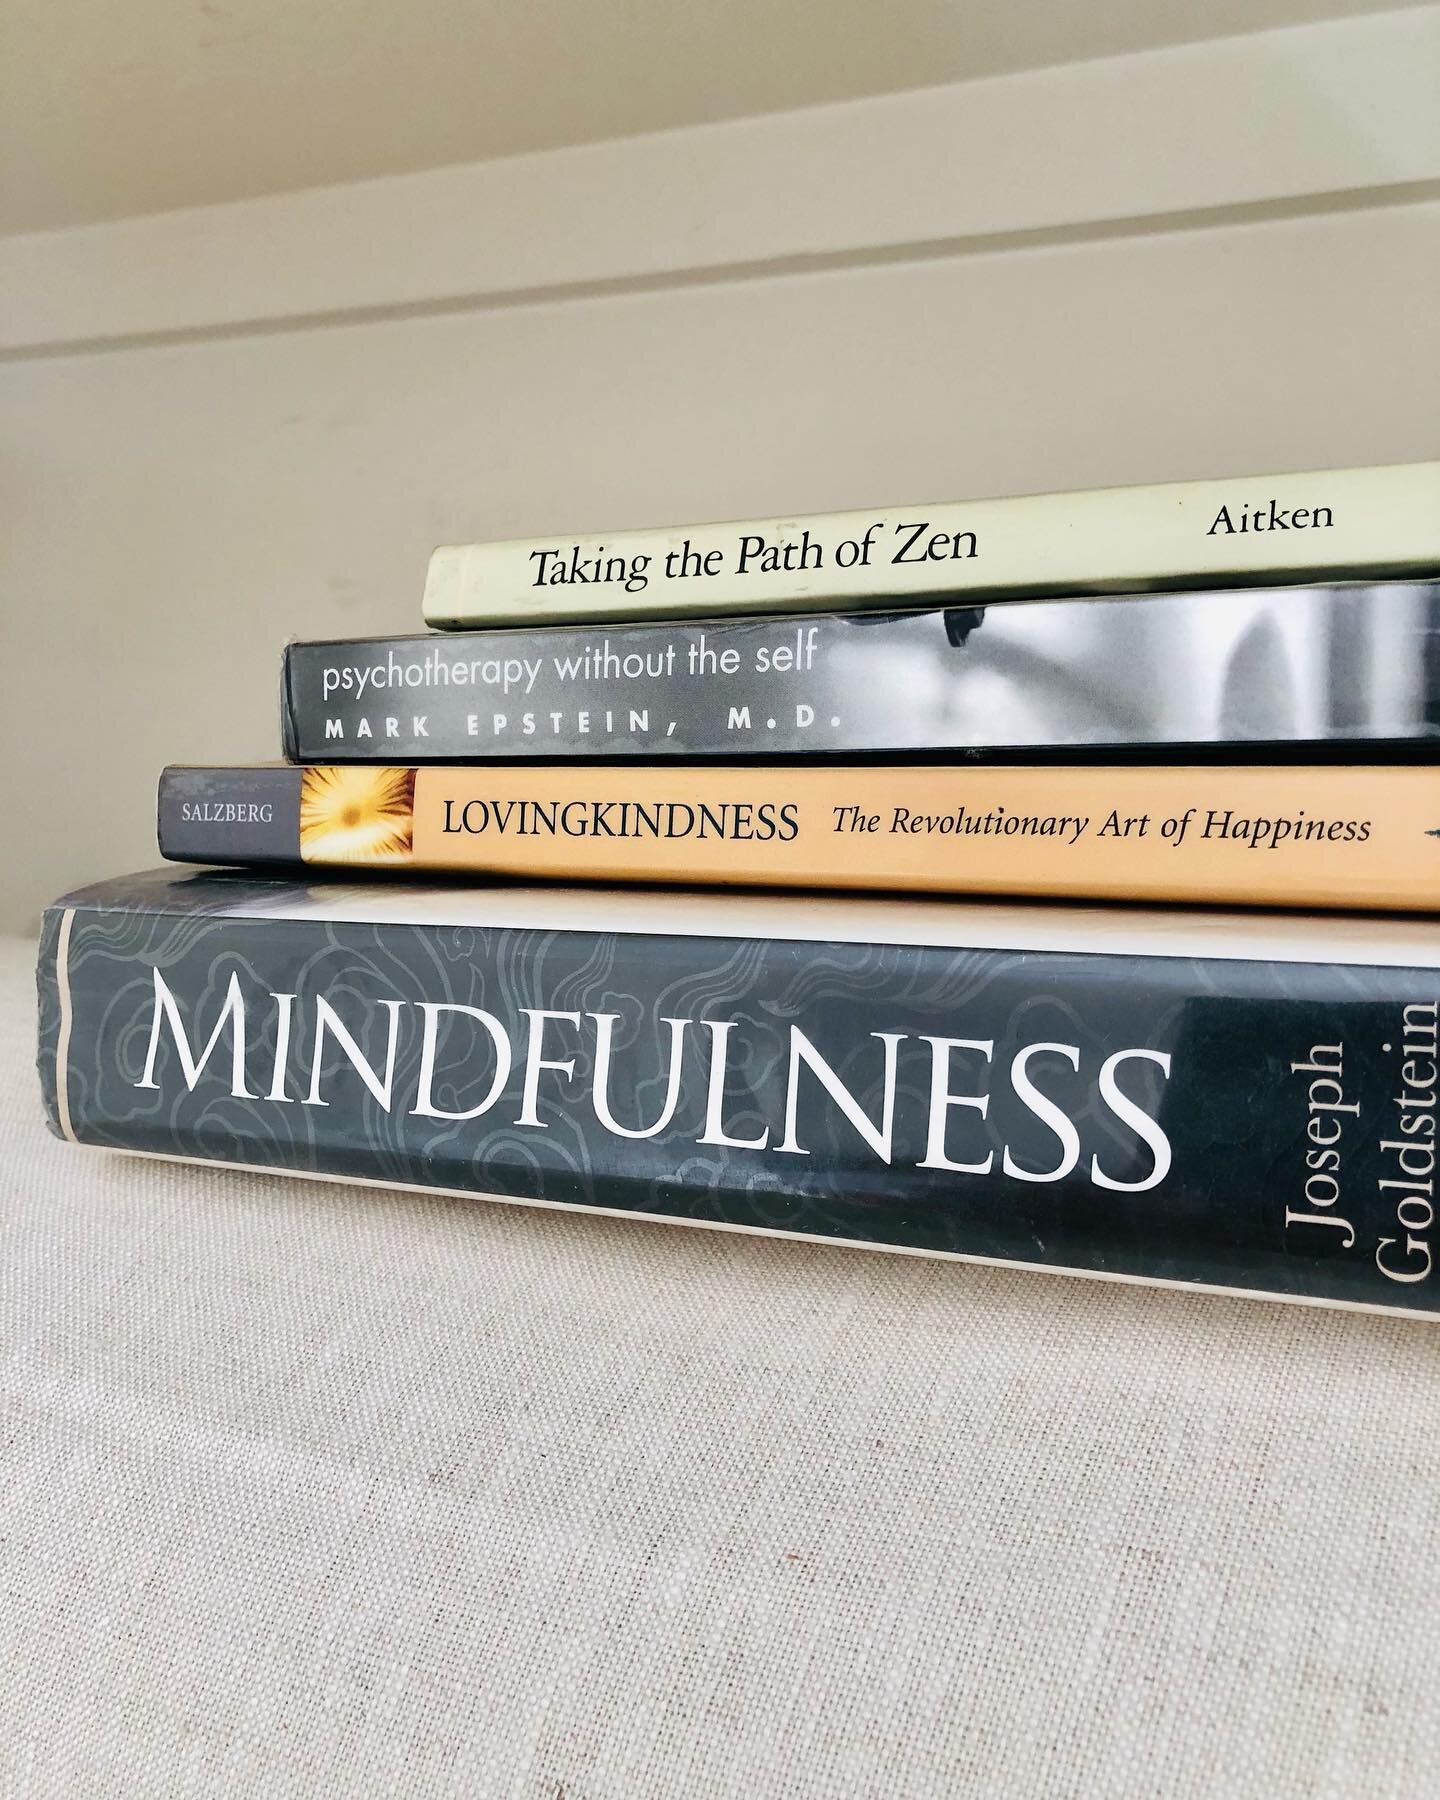 Current stack #neridareads

.

#meditation #mindfulness #compassion #psychotherapy #buddhism #lovingkindness #psychology #contemplative